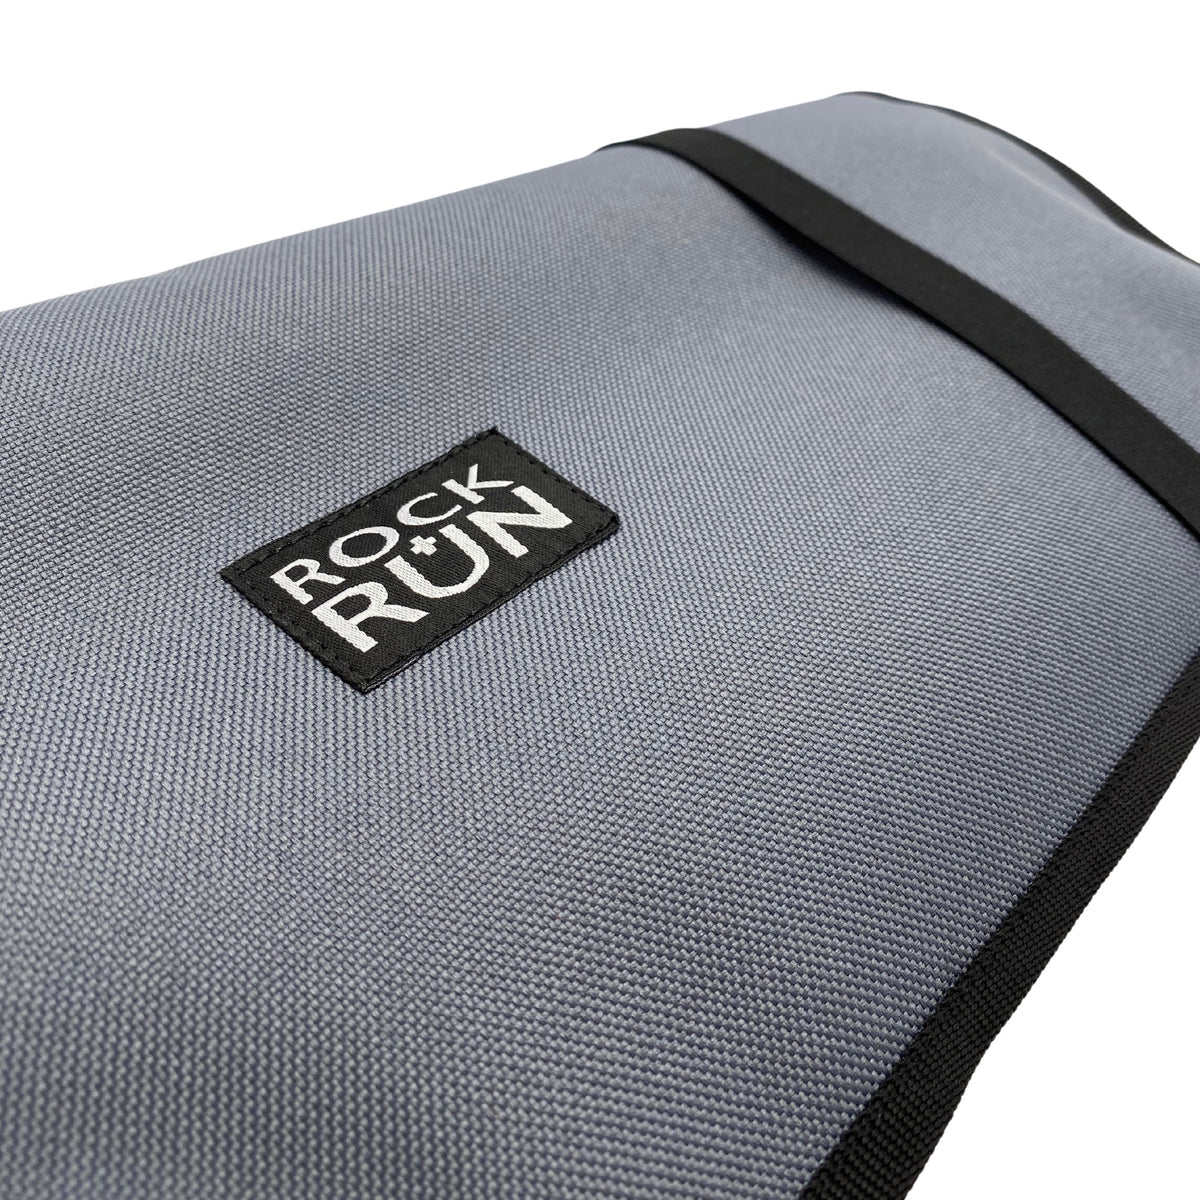 Rock + Run Classic Crampon Bag